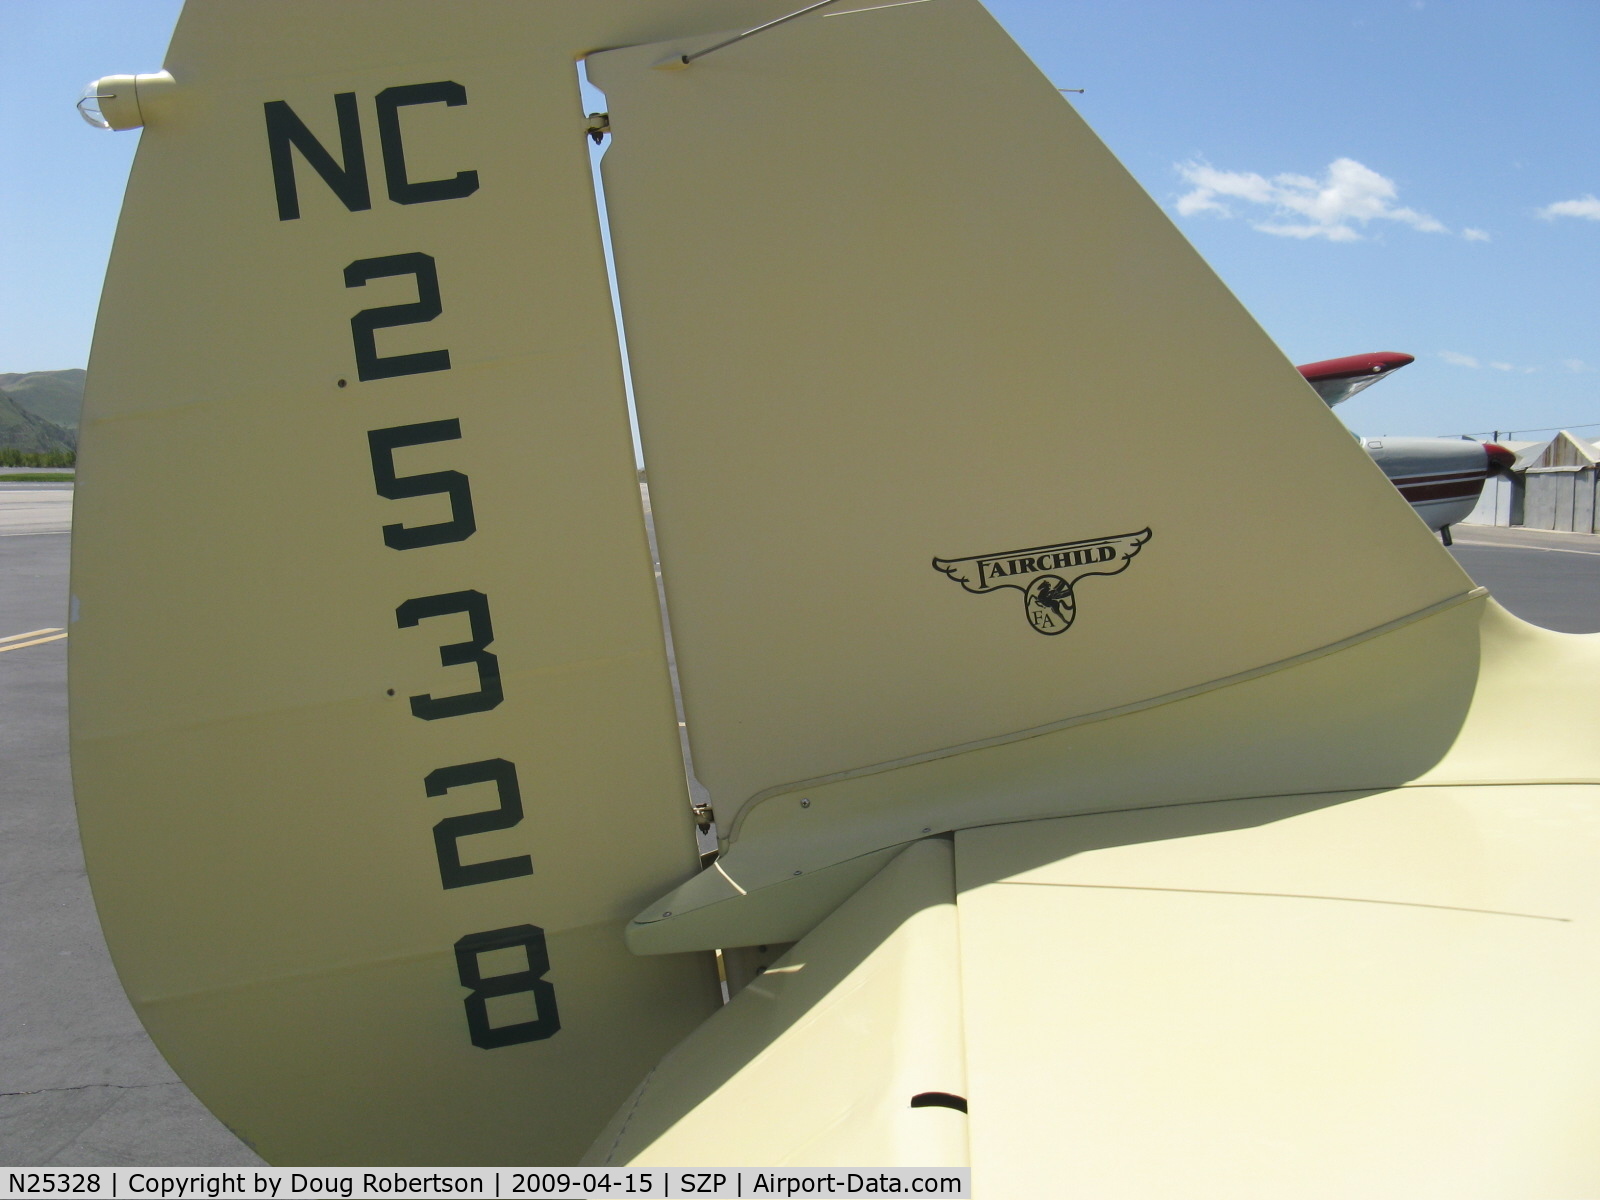 N25328, 1940 Fairchild 24W-40 C/N W40-114, 1940 Fairchild 24W-40, Warner Super Scarab 165 165 Hp/175 Hp for takeoff radial upgrade from original 145 Hp, Fairchild logo